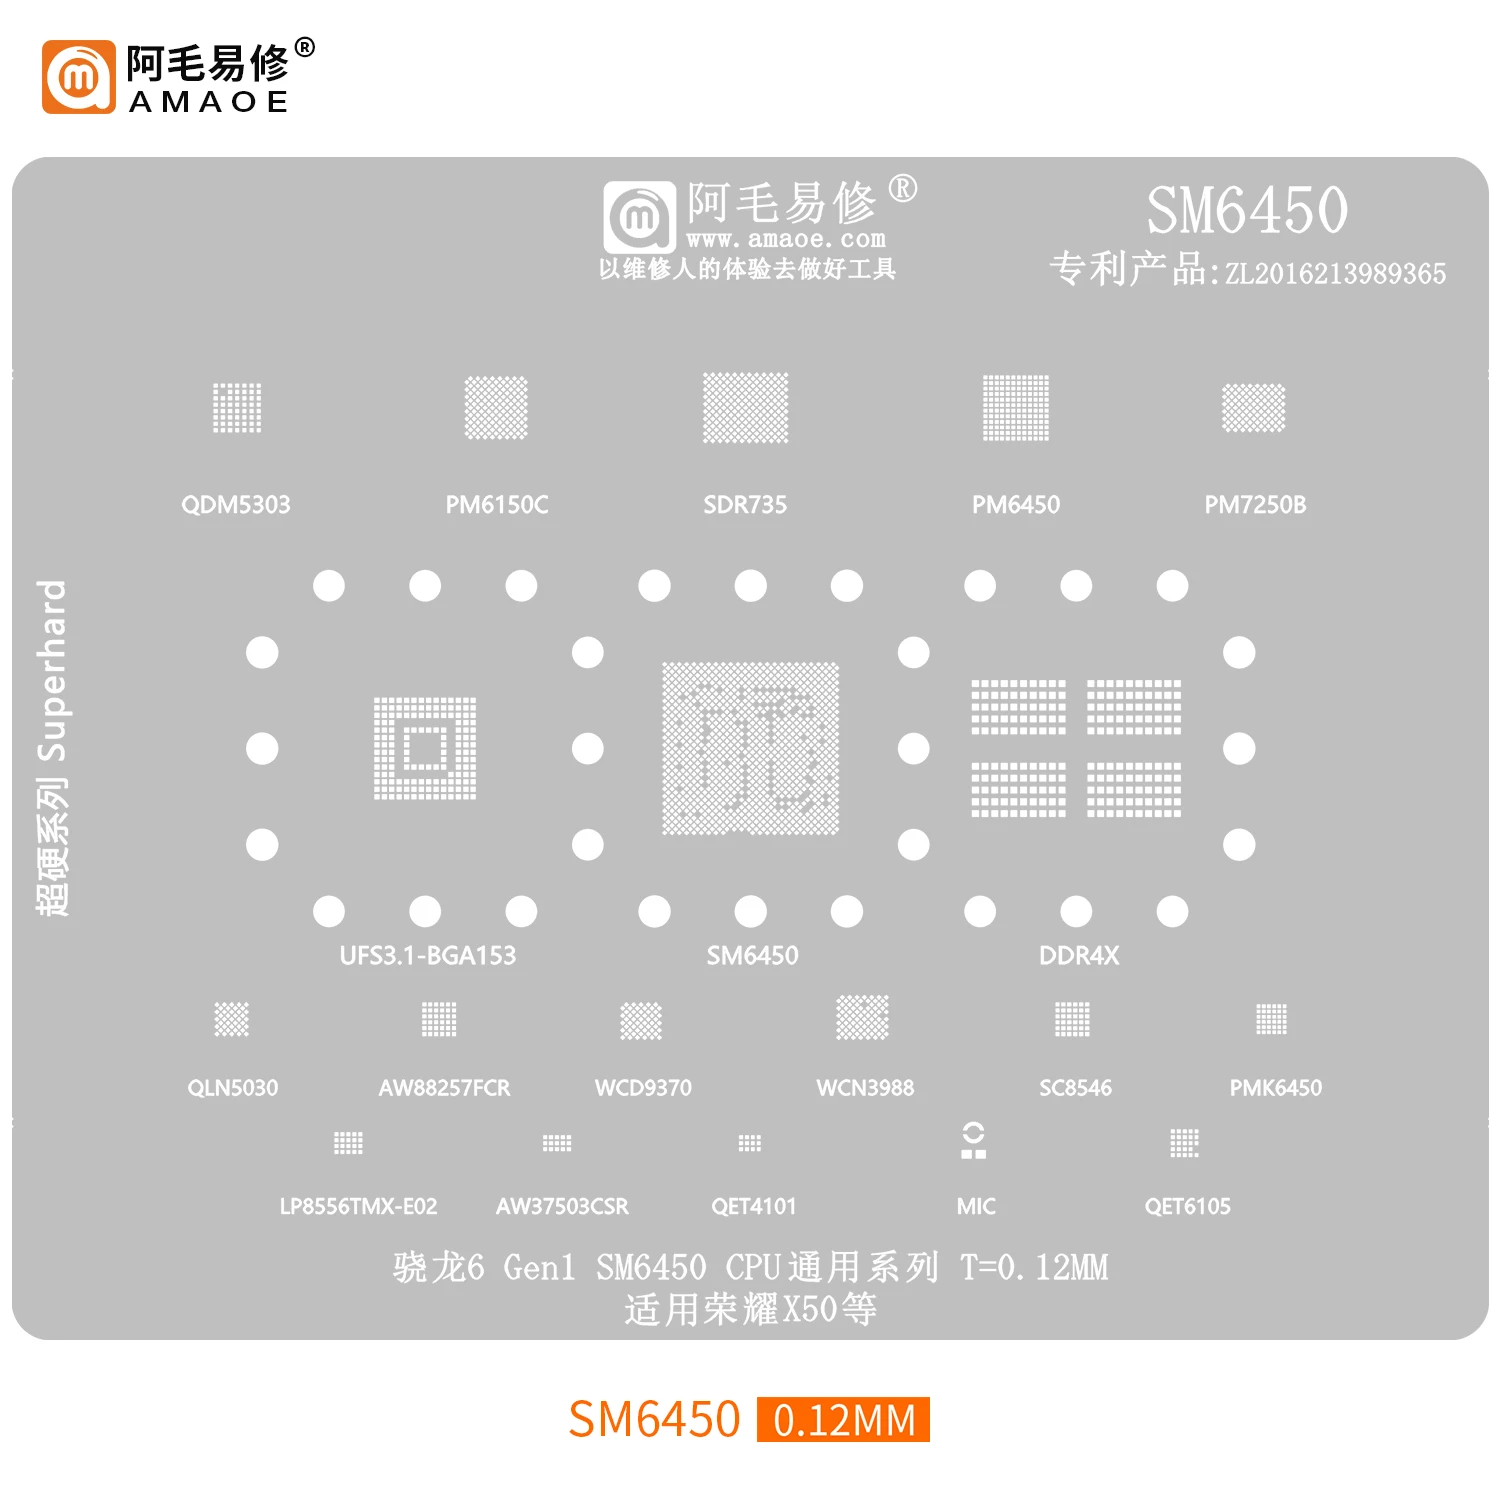 

BGA Reballing Stencil for SM6450 snapdragon 6 gen1 BGA153 DDR4X pm7250b sdr735 PM6150 WCN3988 qln5030 wcd9370 qet4101